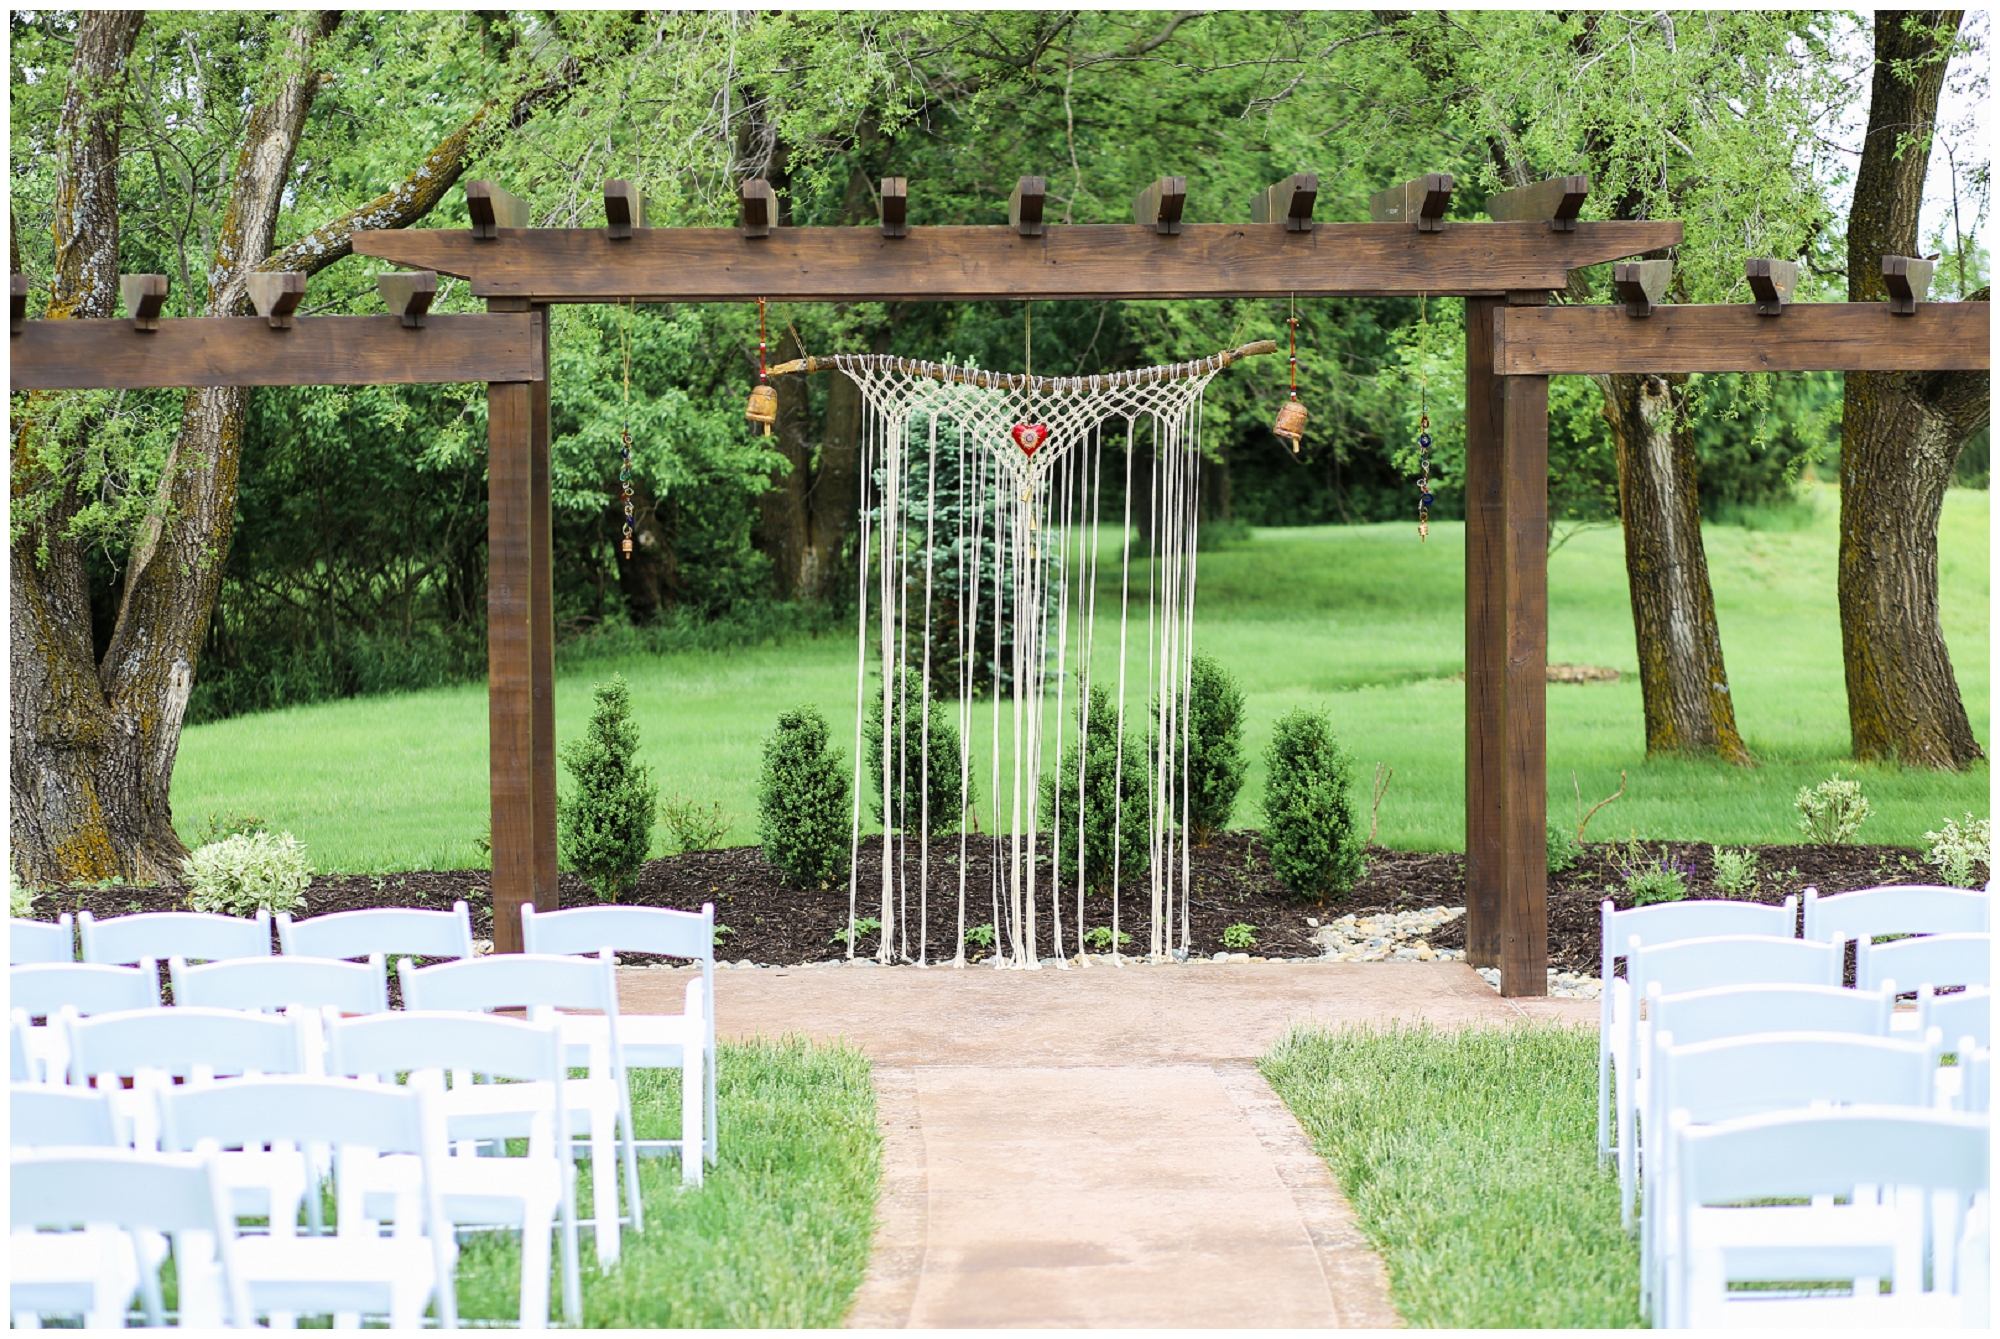 Legacy at Green Hills - Boho Wedding - Kansas City Wedding Photographer - Paper Heart Events - Adorable Wedding Couple - Mariam Saifan Photography - Outdoor Wedding - Farm Wedding